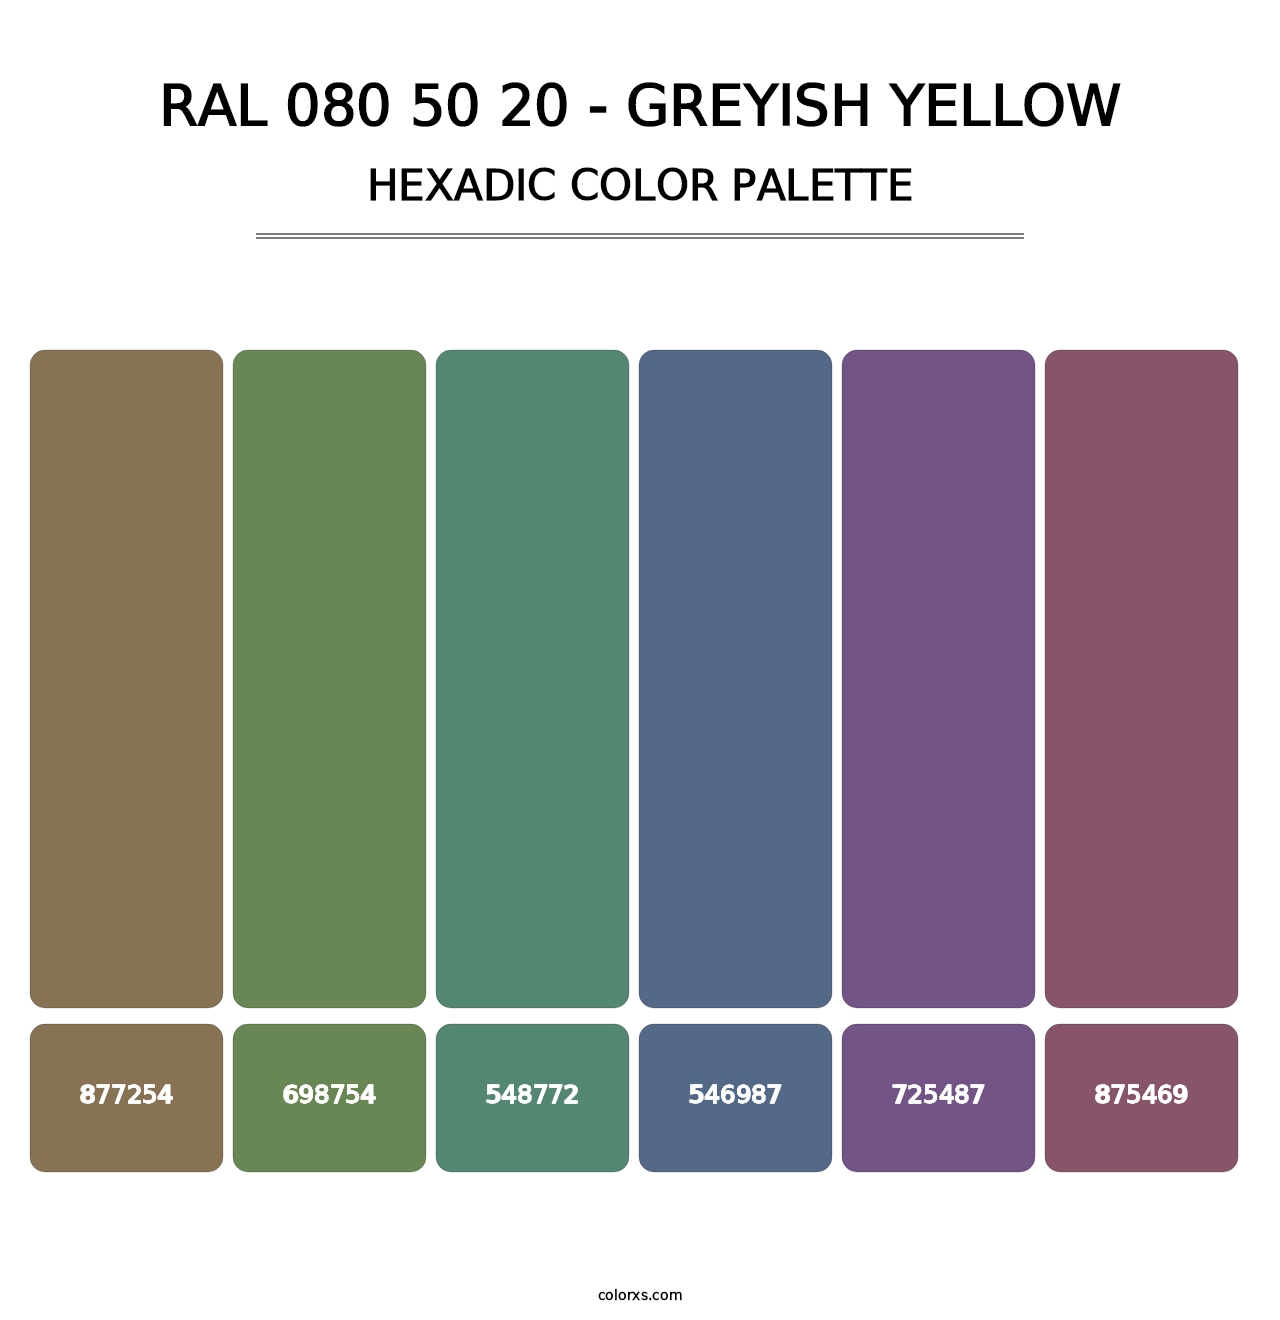 RAL 080 50 20 - Greyish Yellow - Hexadic Color Palette